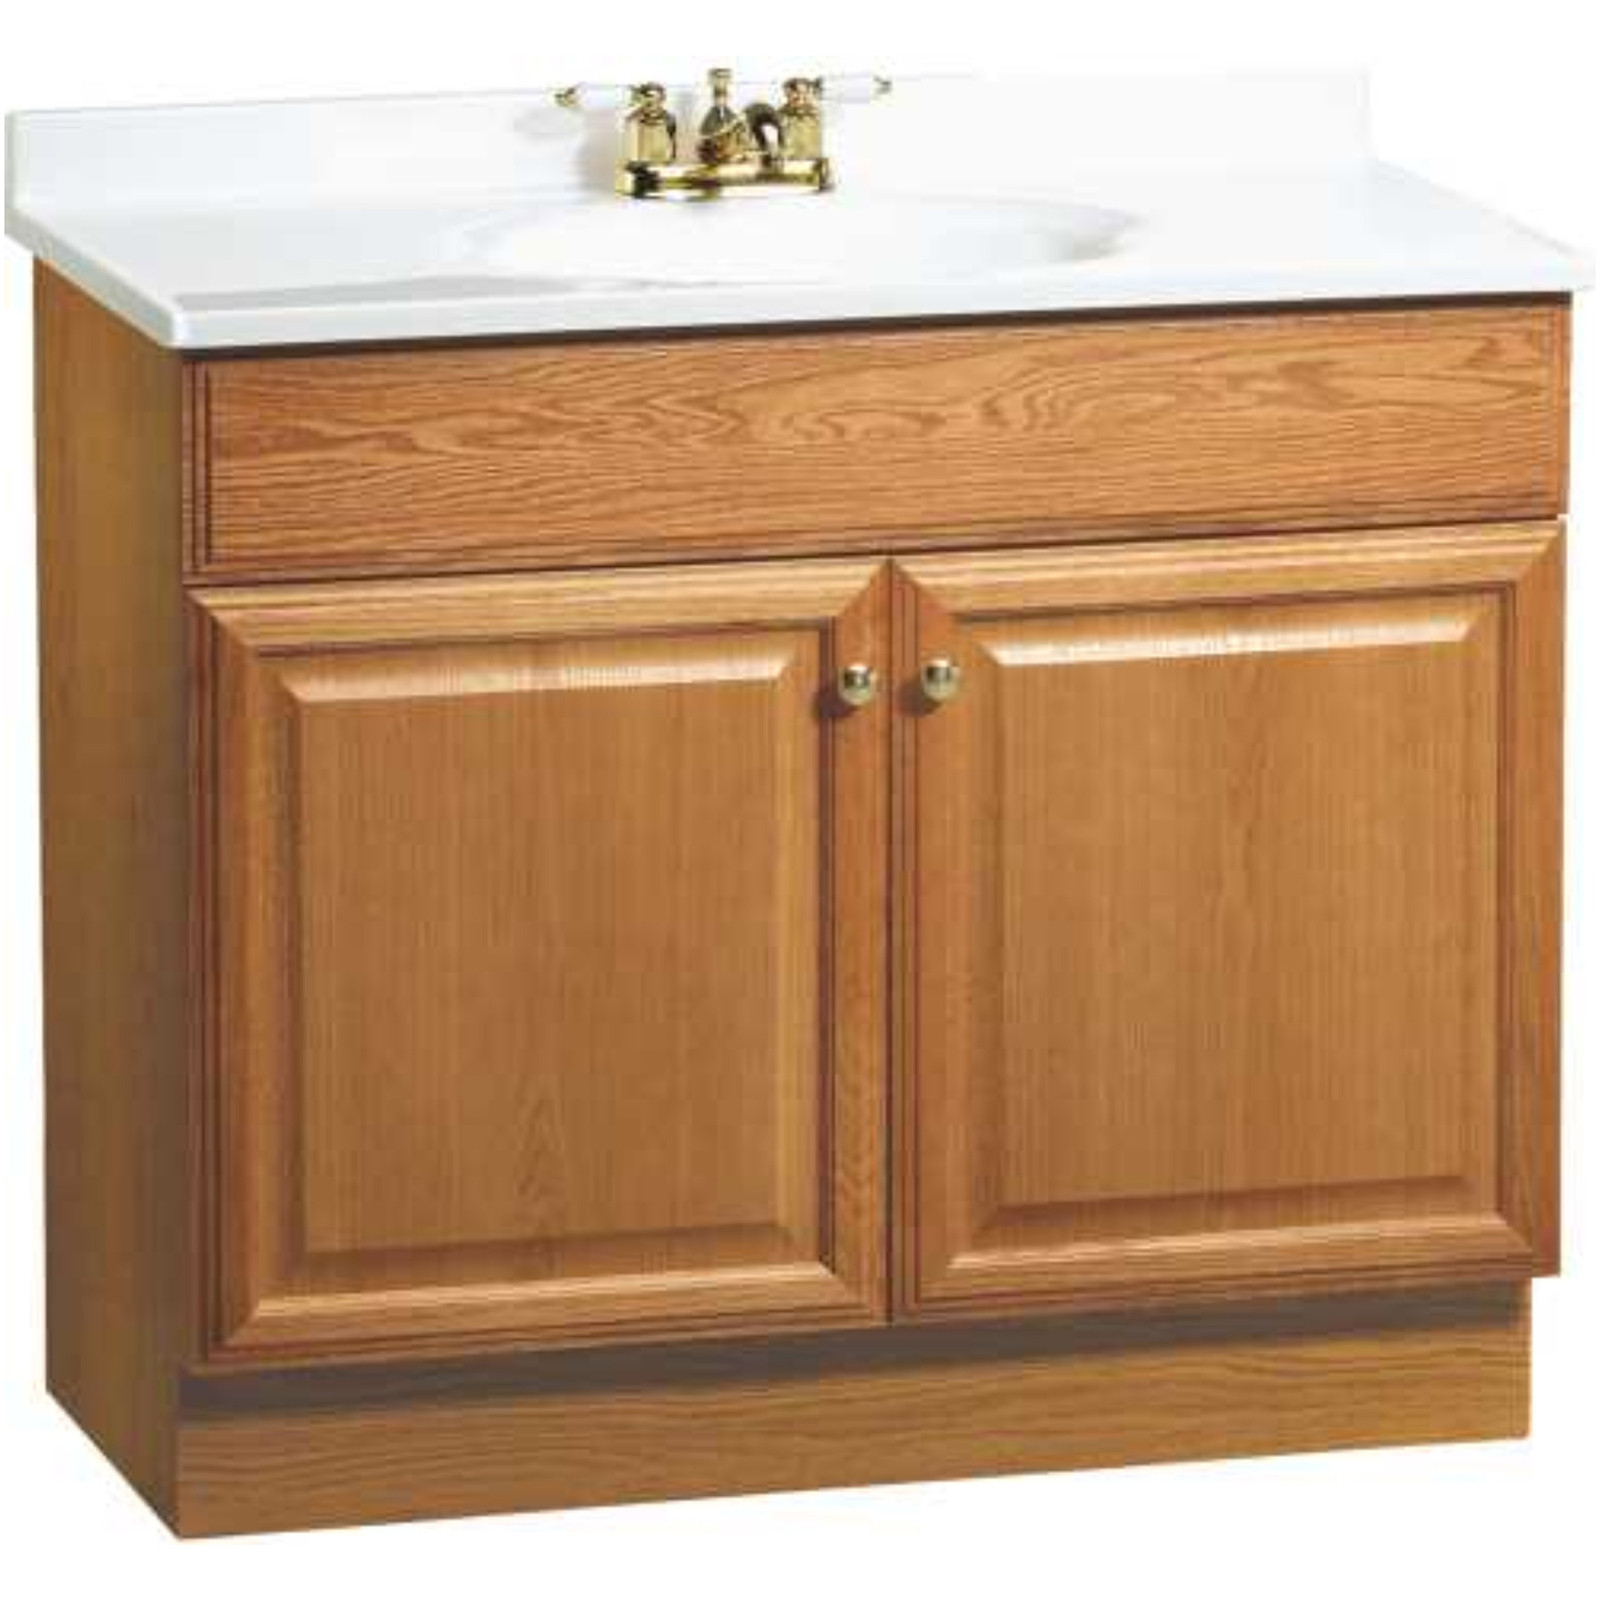 36 Bathroom Cabinet
 RSI Home Products 36" Bathroom Vanity Cabinet Sears